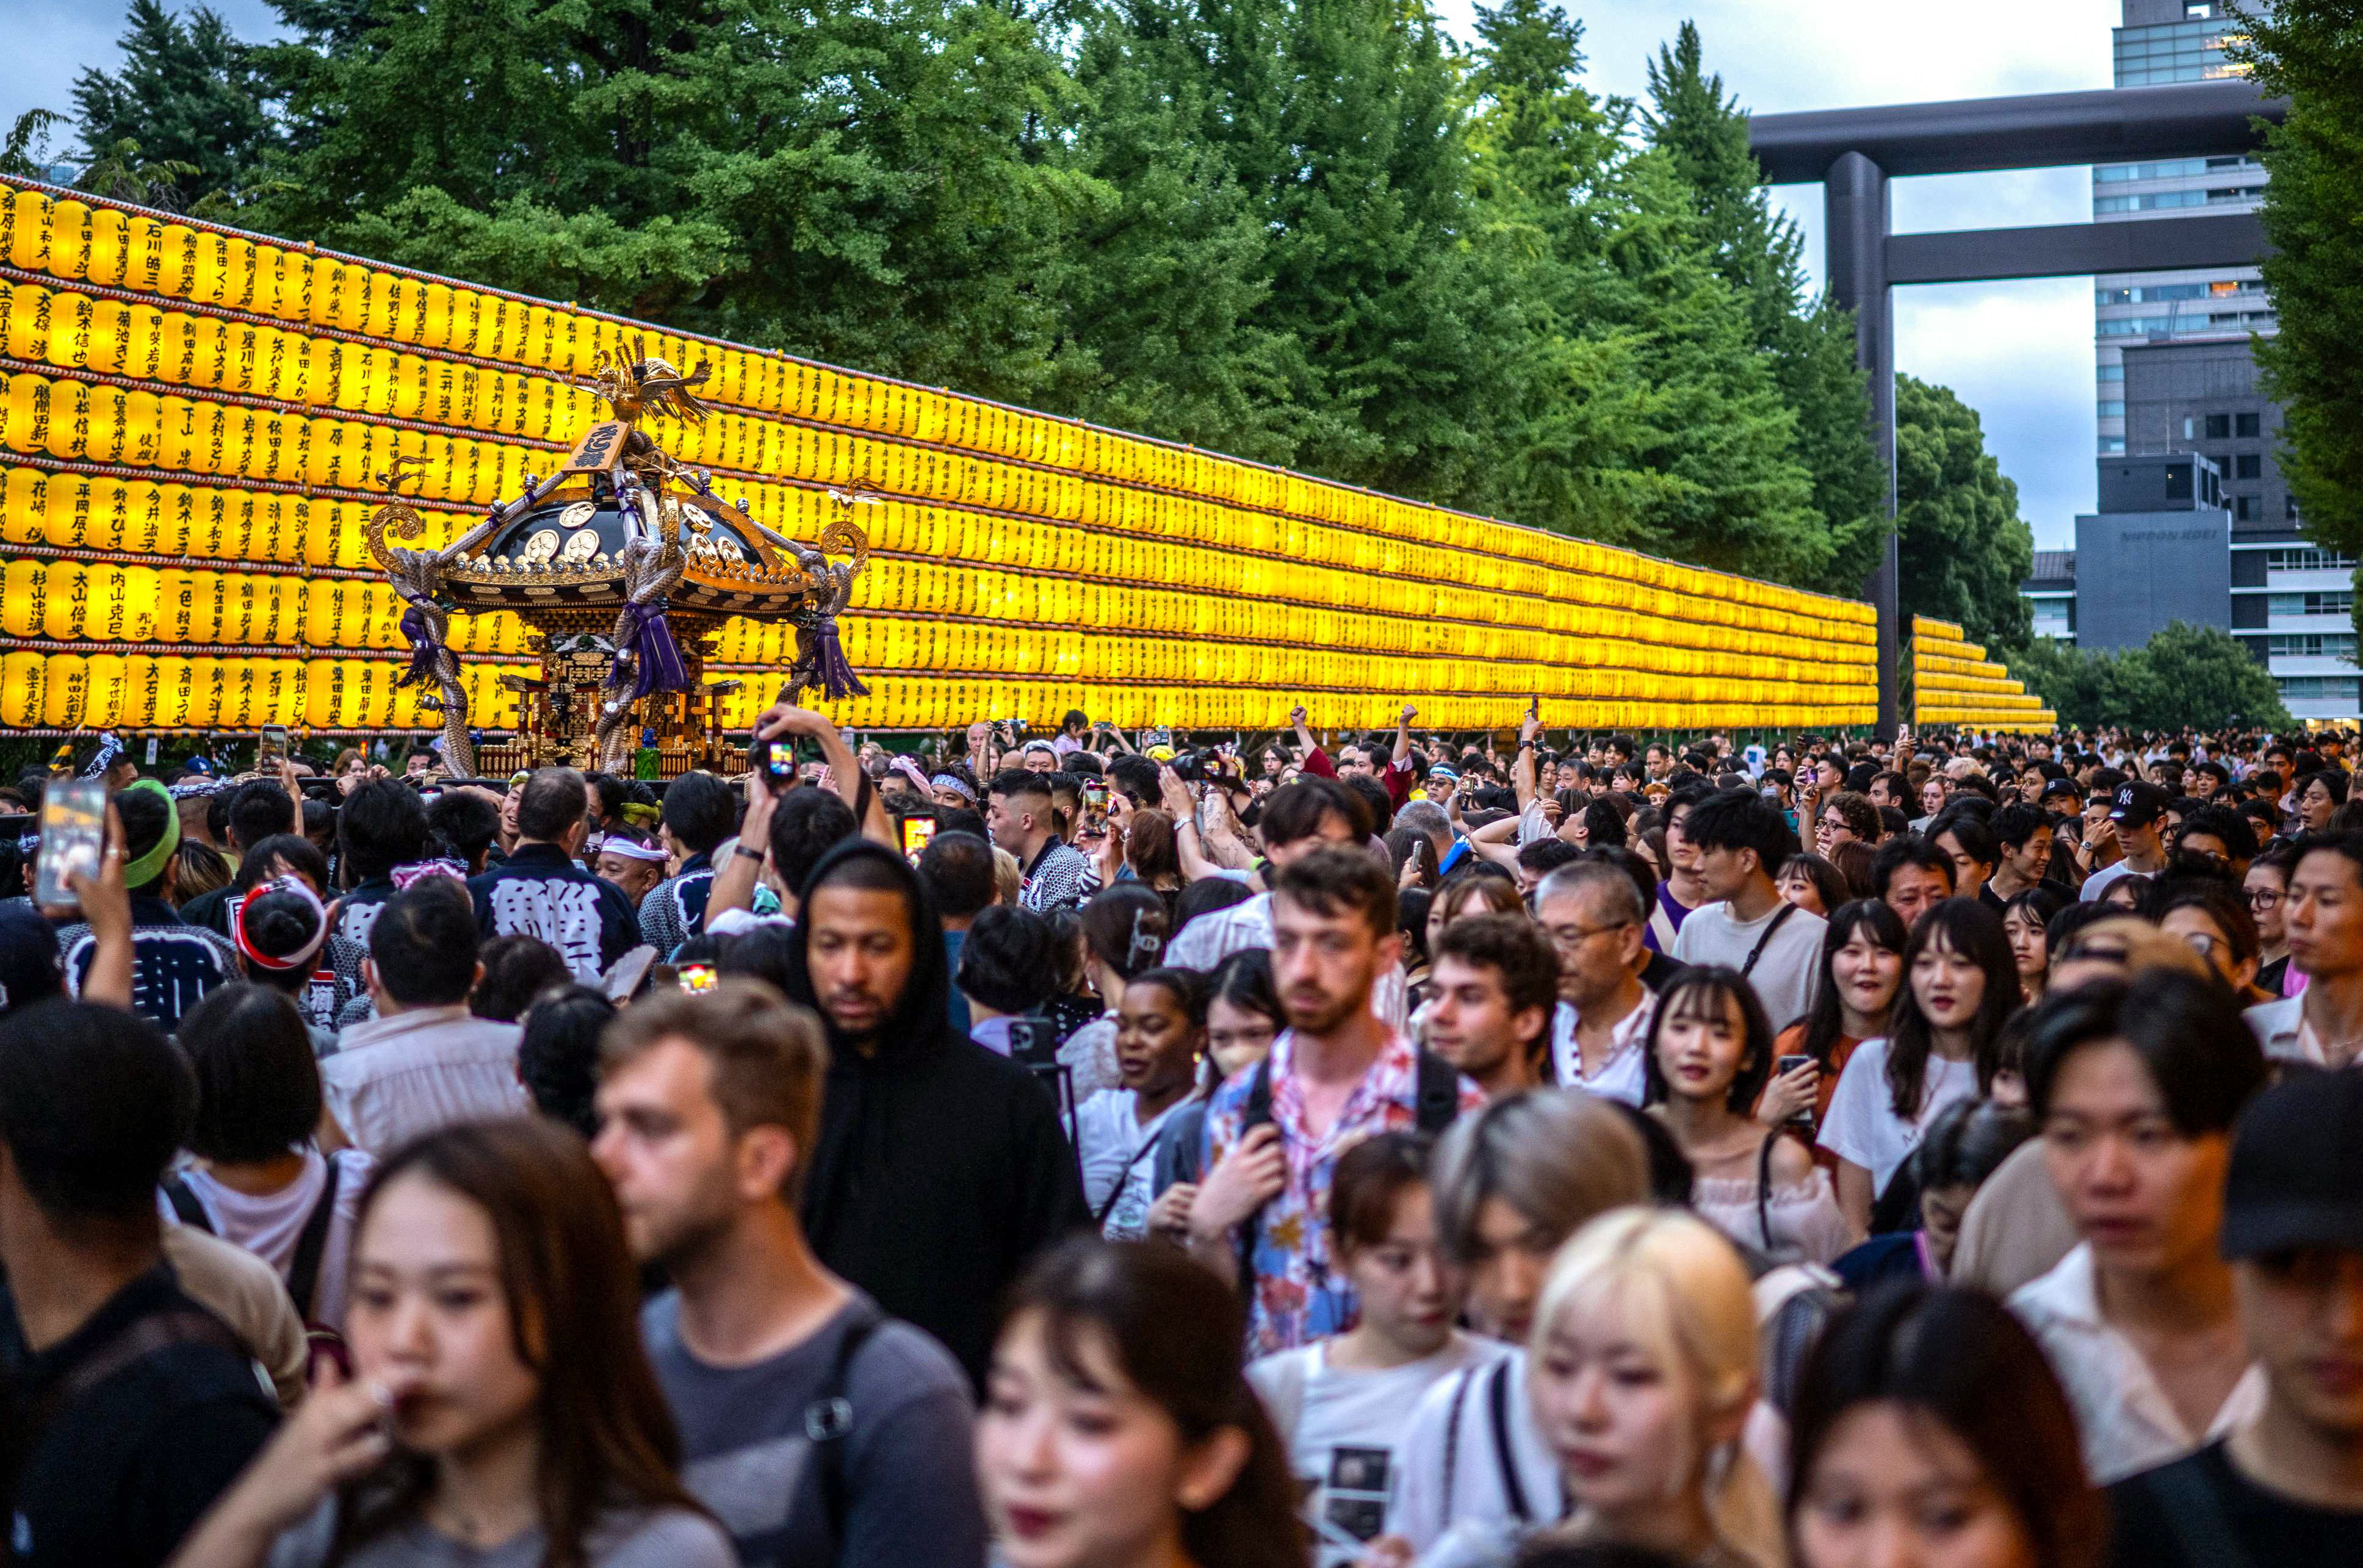 International visitors throng Mitama Matsuri, one of Tokyo’s largest summer events. Photo: AFP